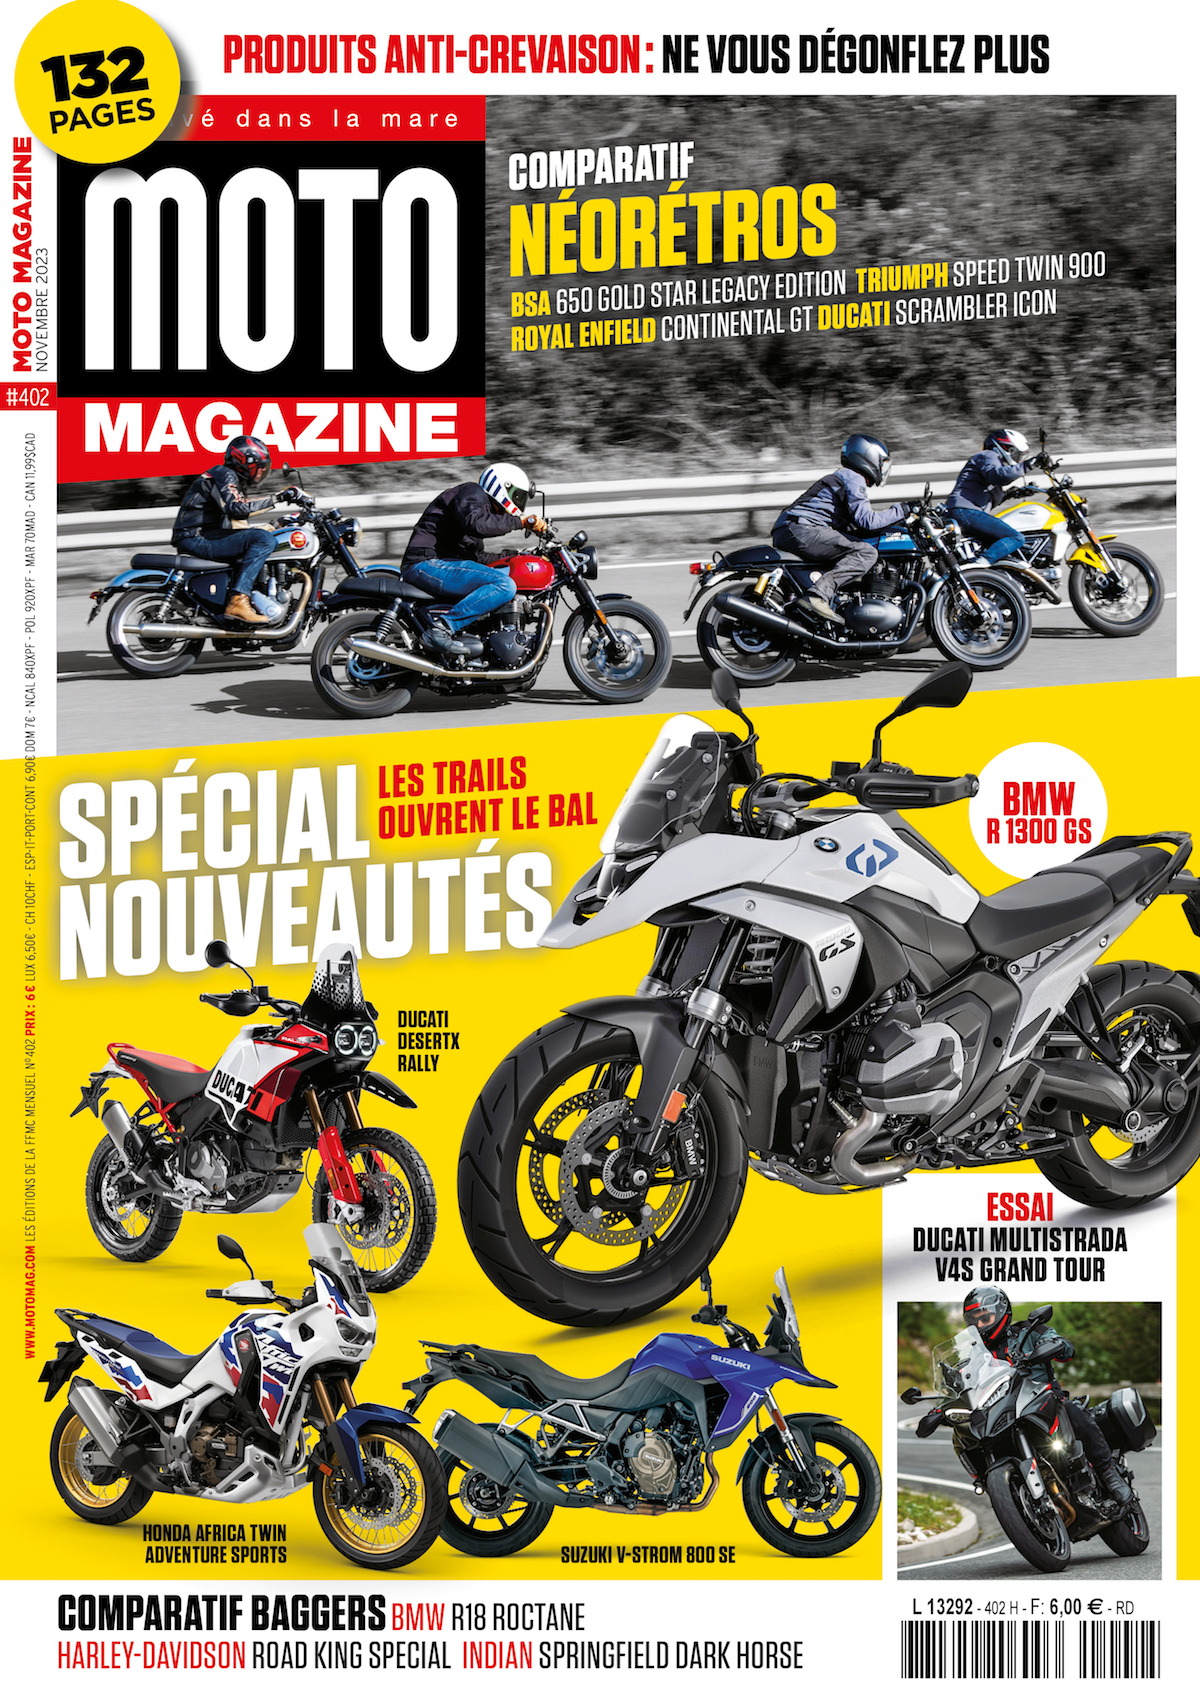 Moto Magazine n°402 est en kiosque !